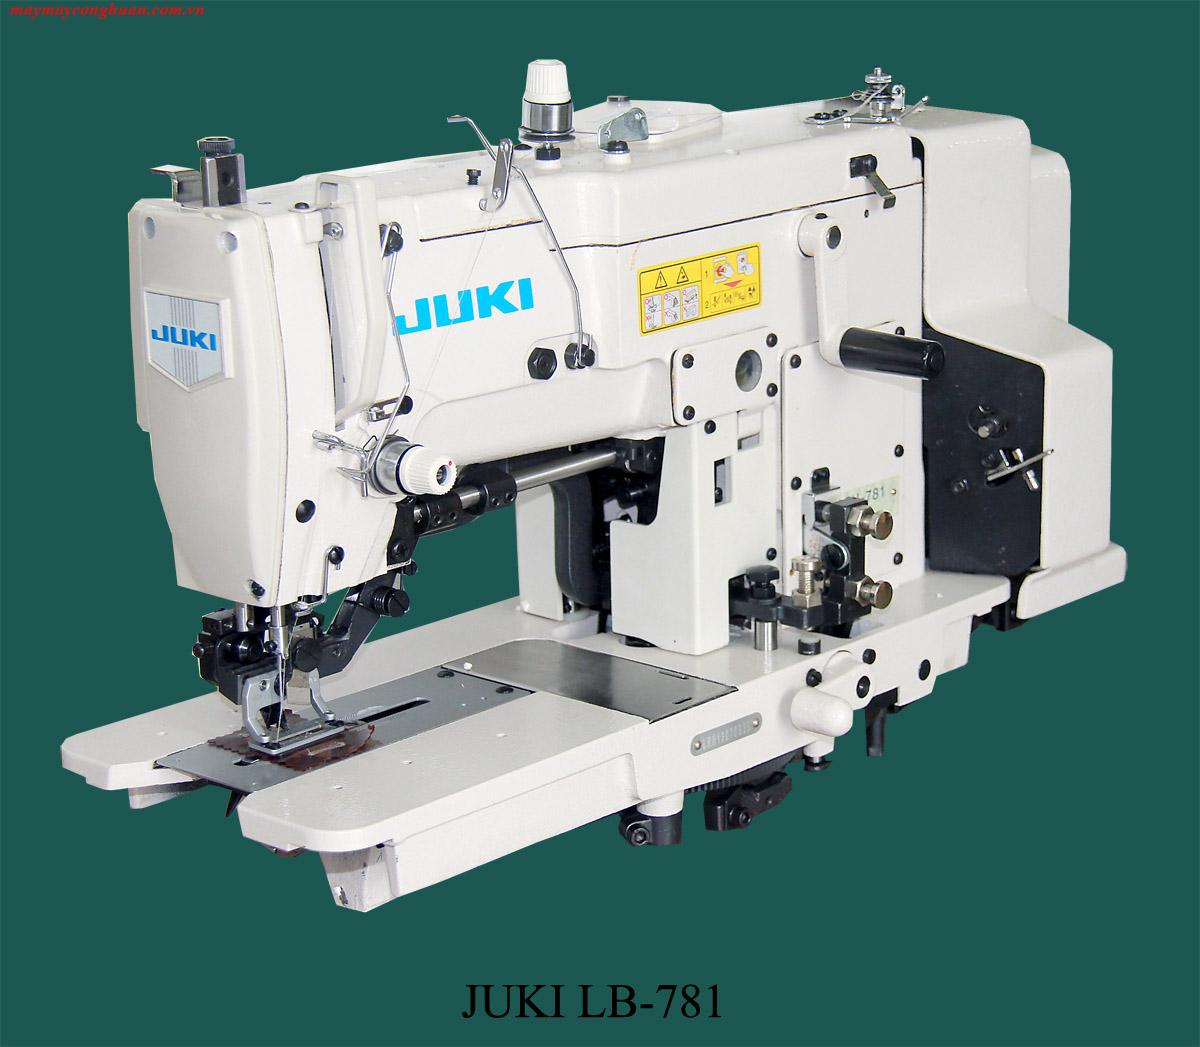 JUKI LB-781